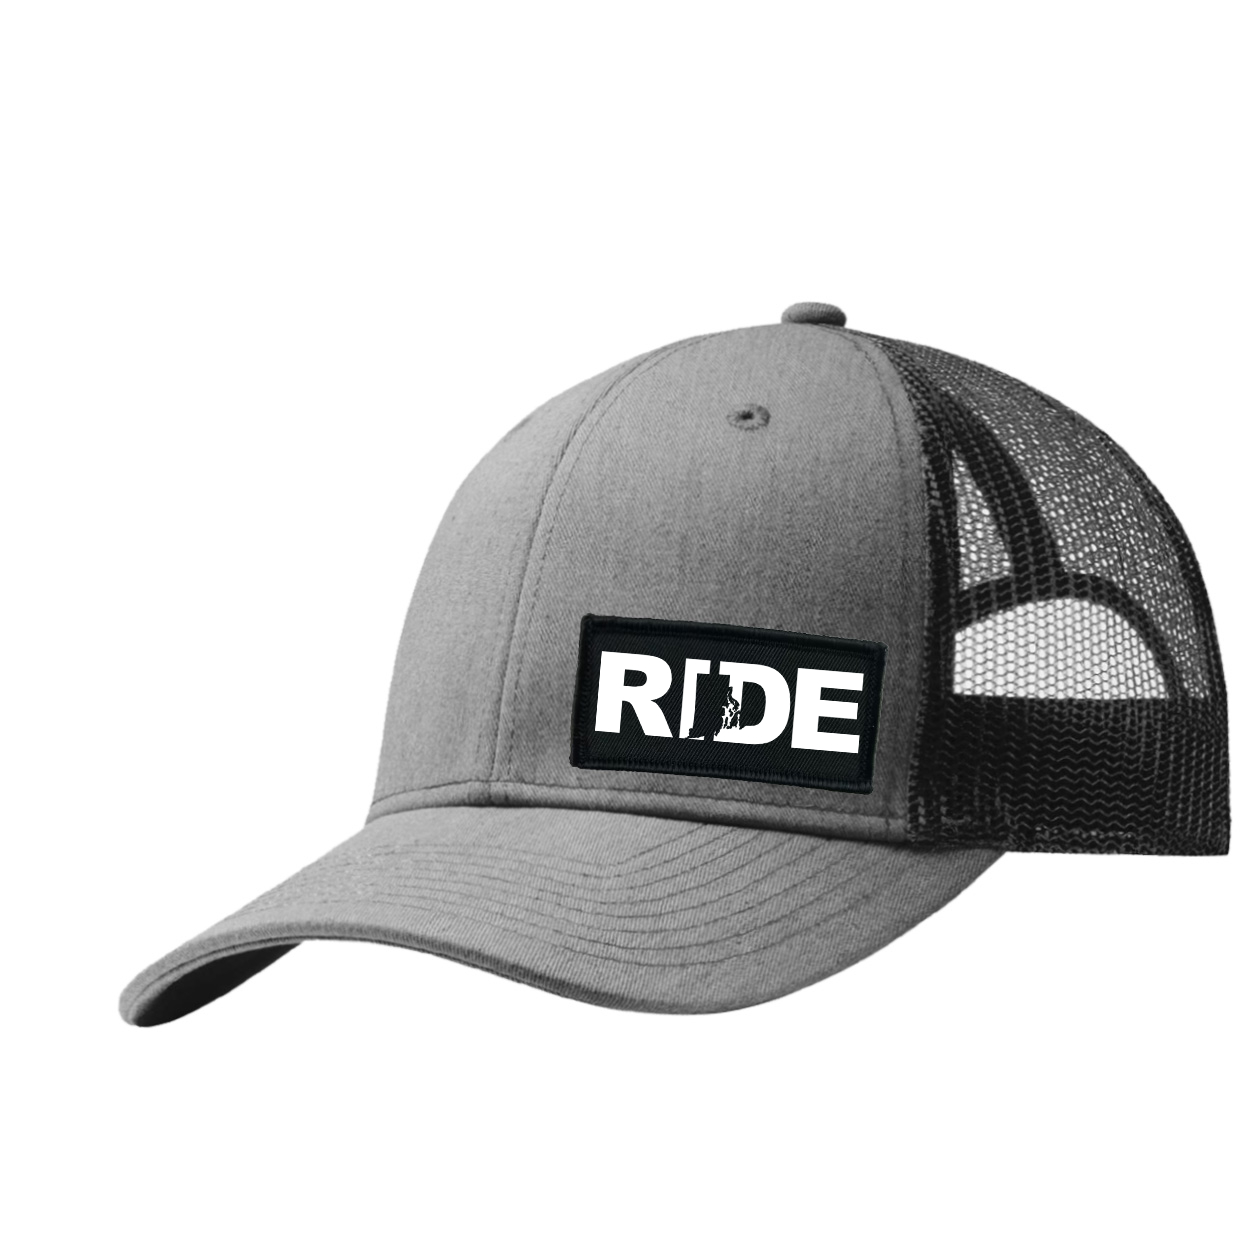 Ride Rhode Island Night Out Woven Patch Snapback Trucker Hat Heather Gray/Black (White Logo)